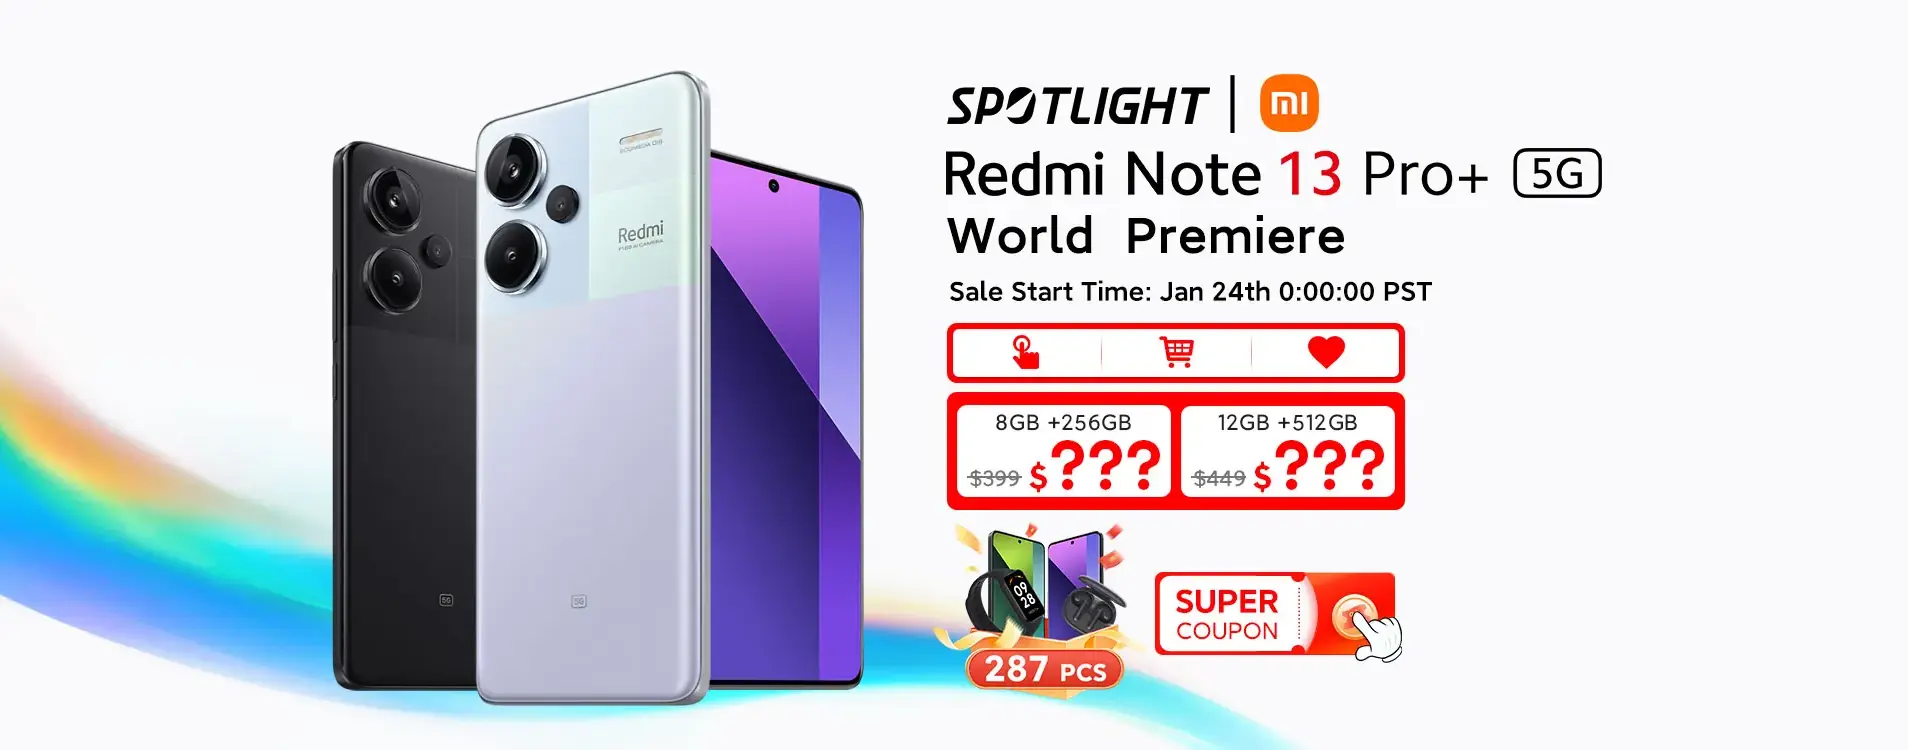 Распродажа смартфонов Xiaomi Redmi Note 13 Pro+ 5G со скидкой